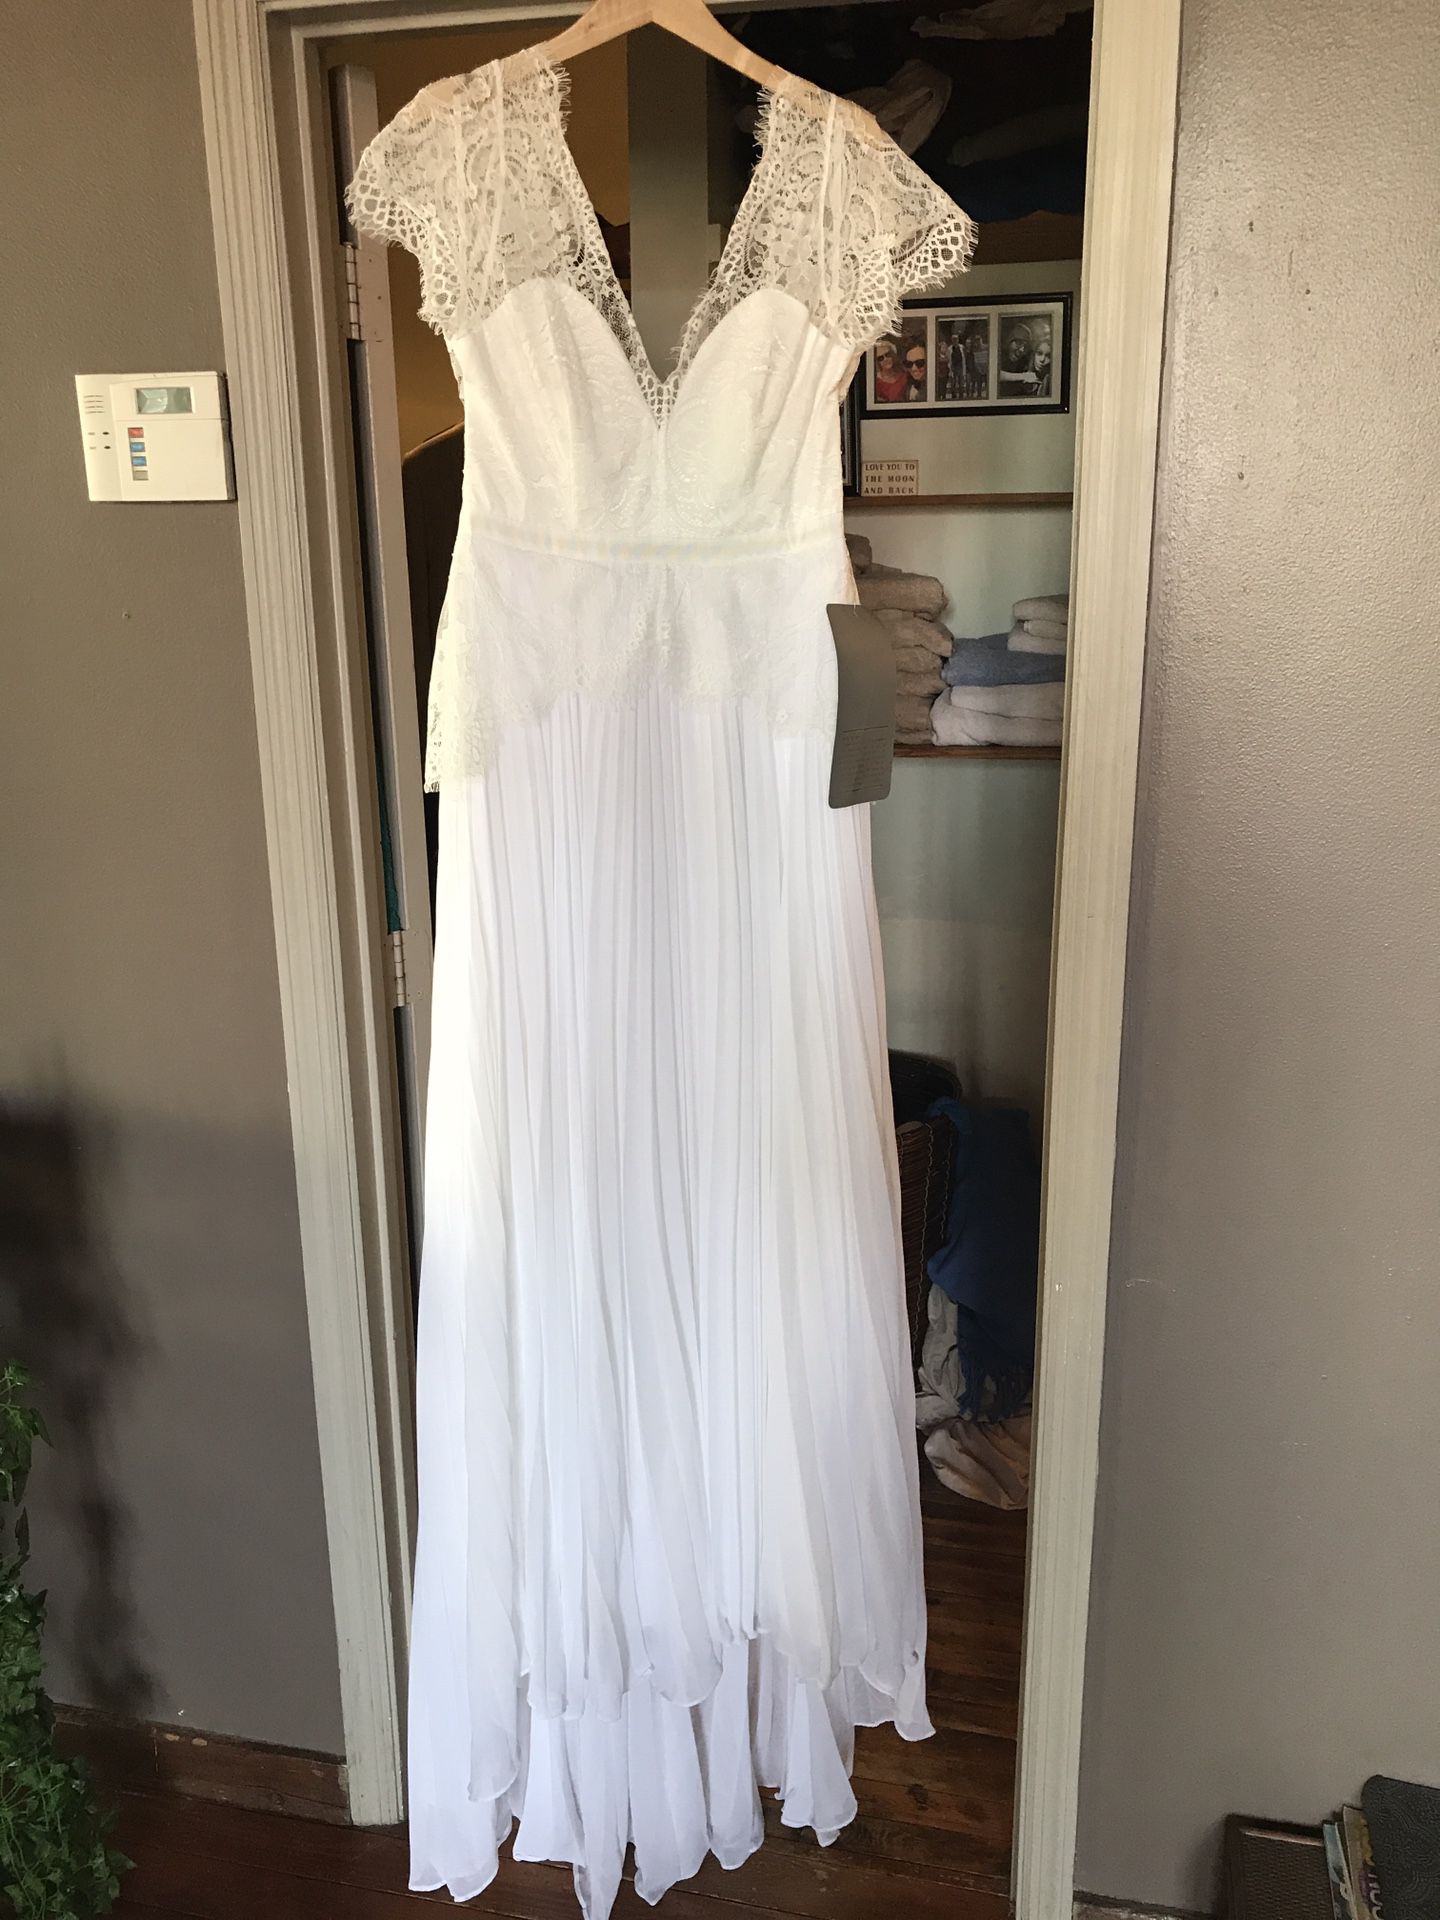 Brand New Lacey Short Sleeved Wedding Dress!